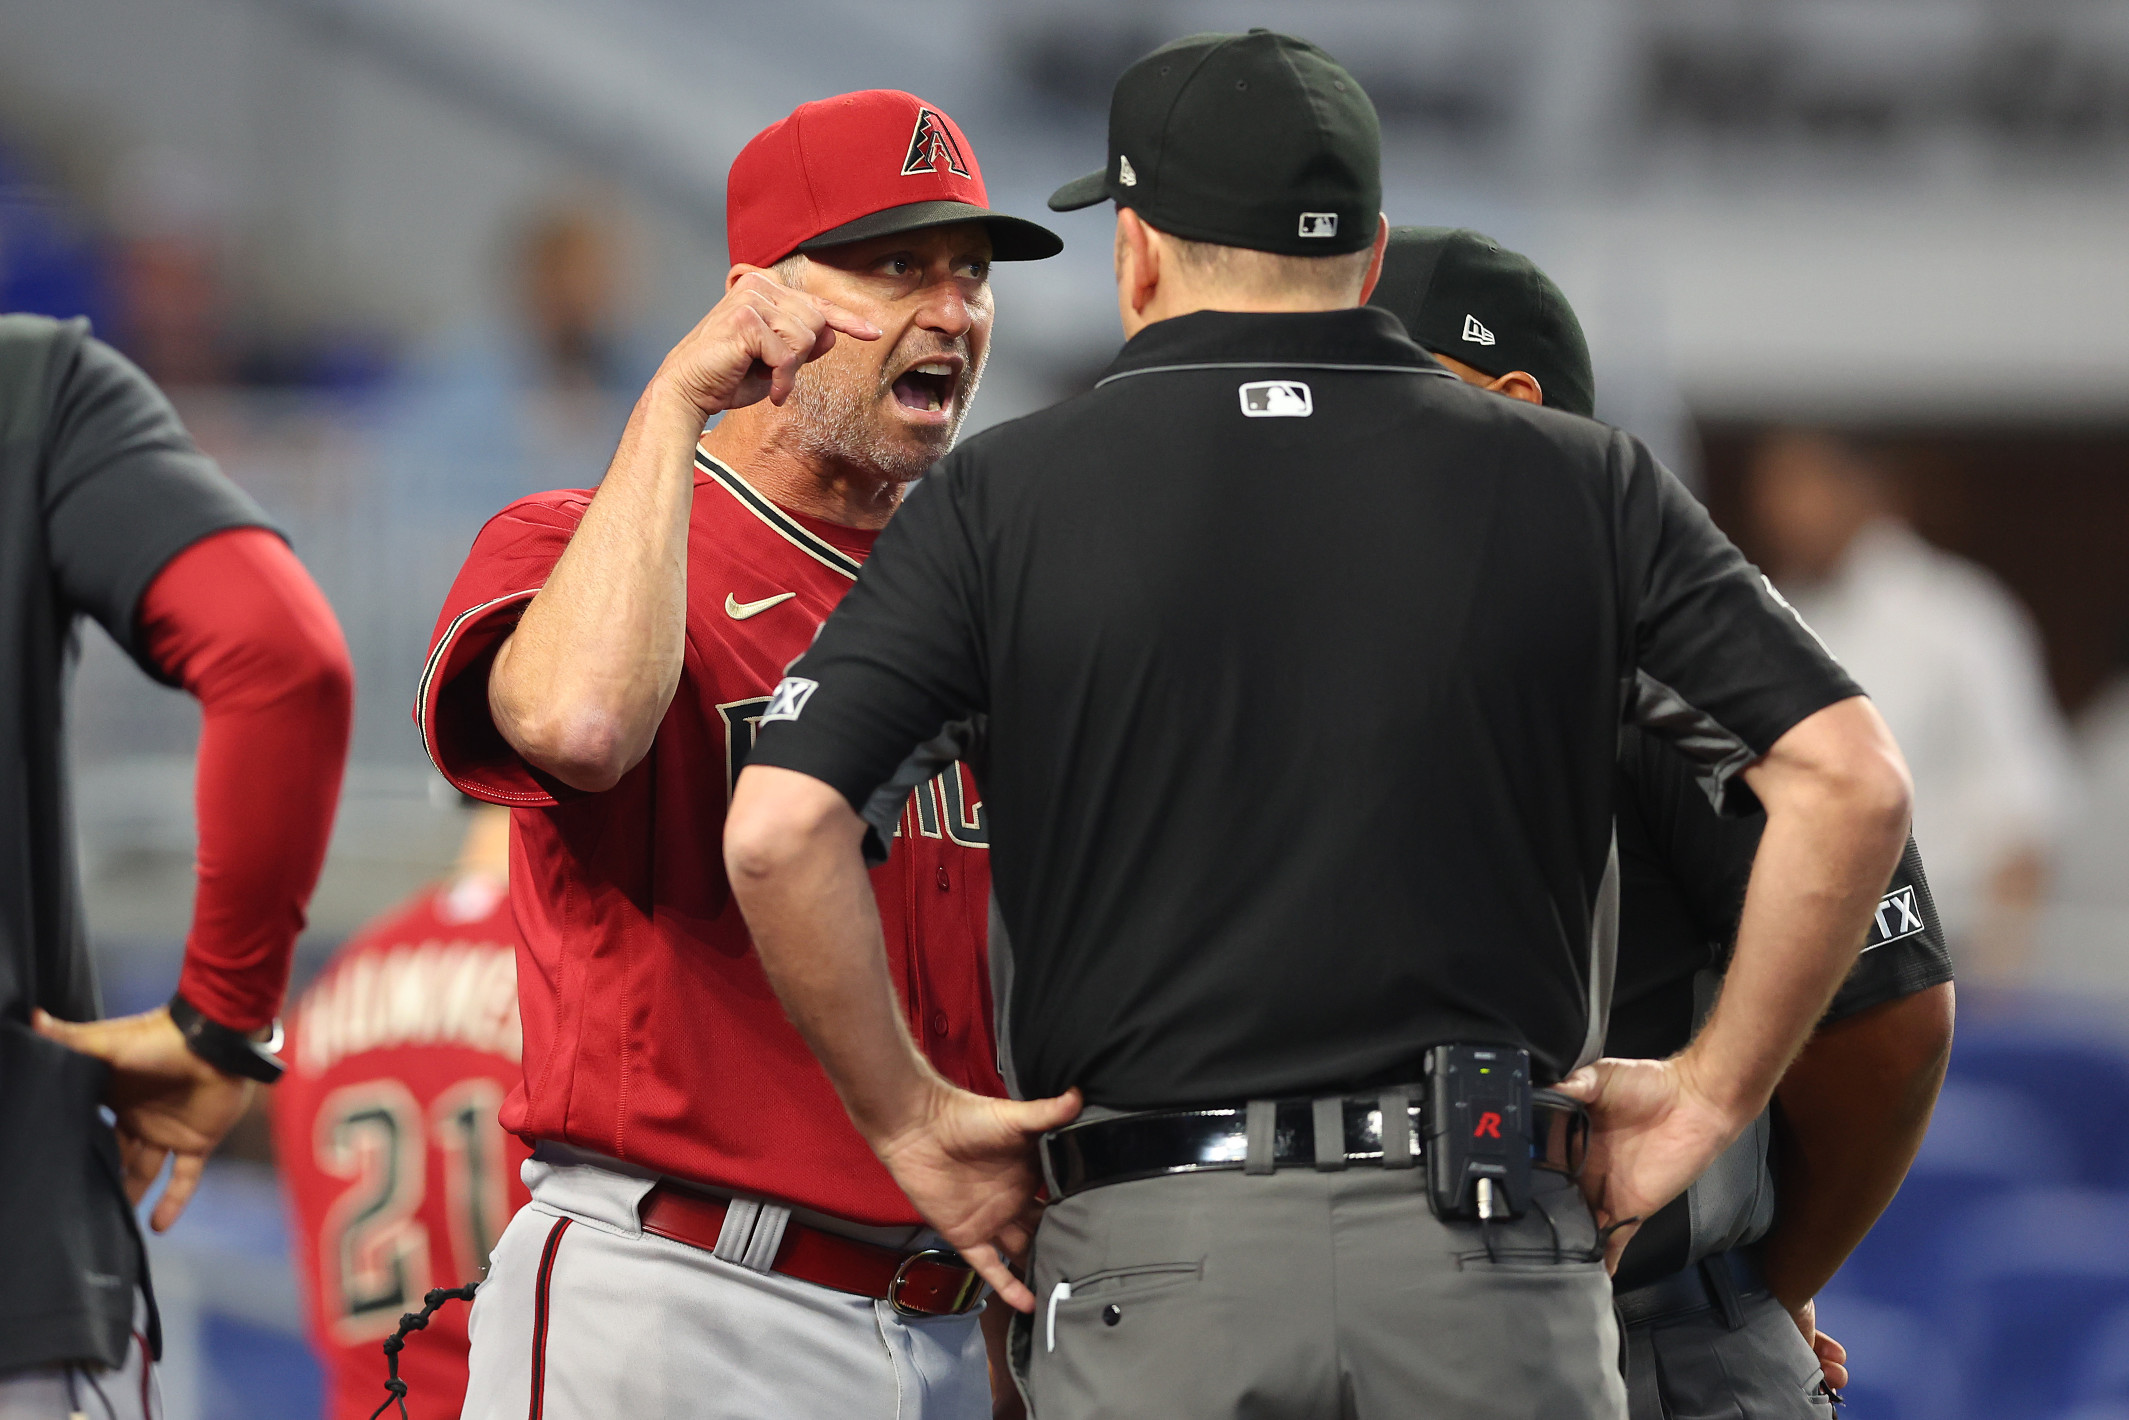 MLB umpire apologizes after ejecting D-backs star Bumgarner